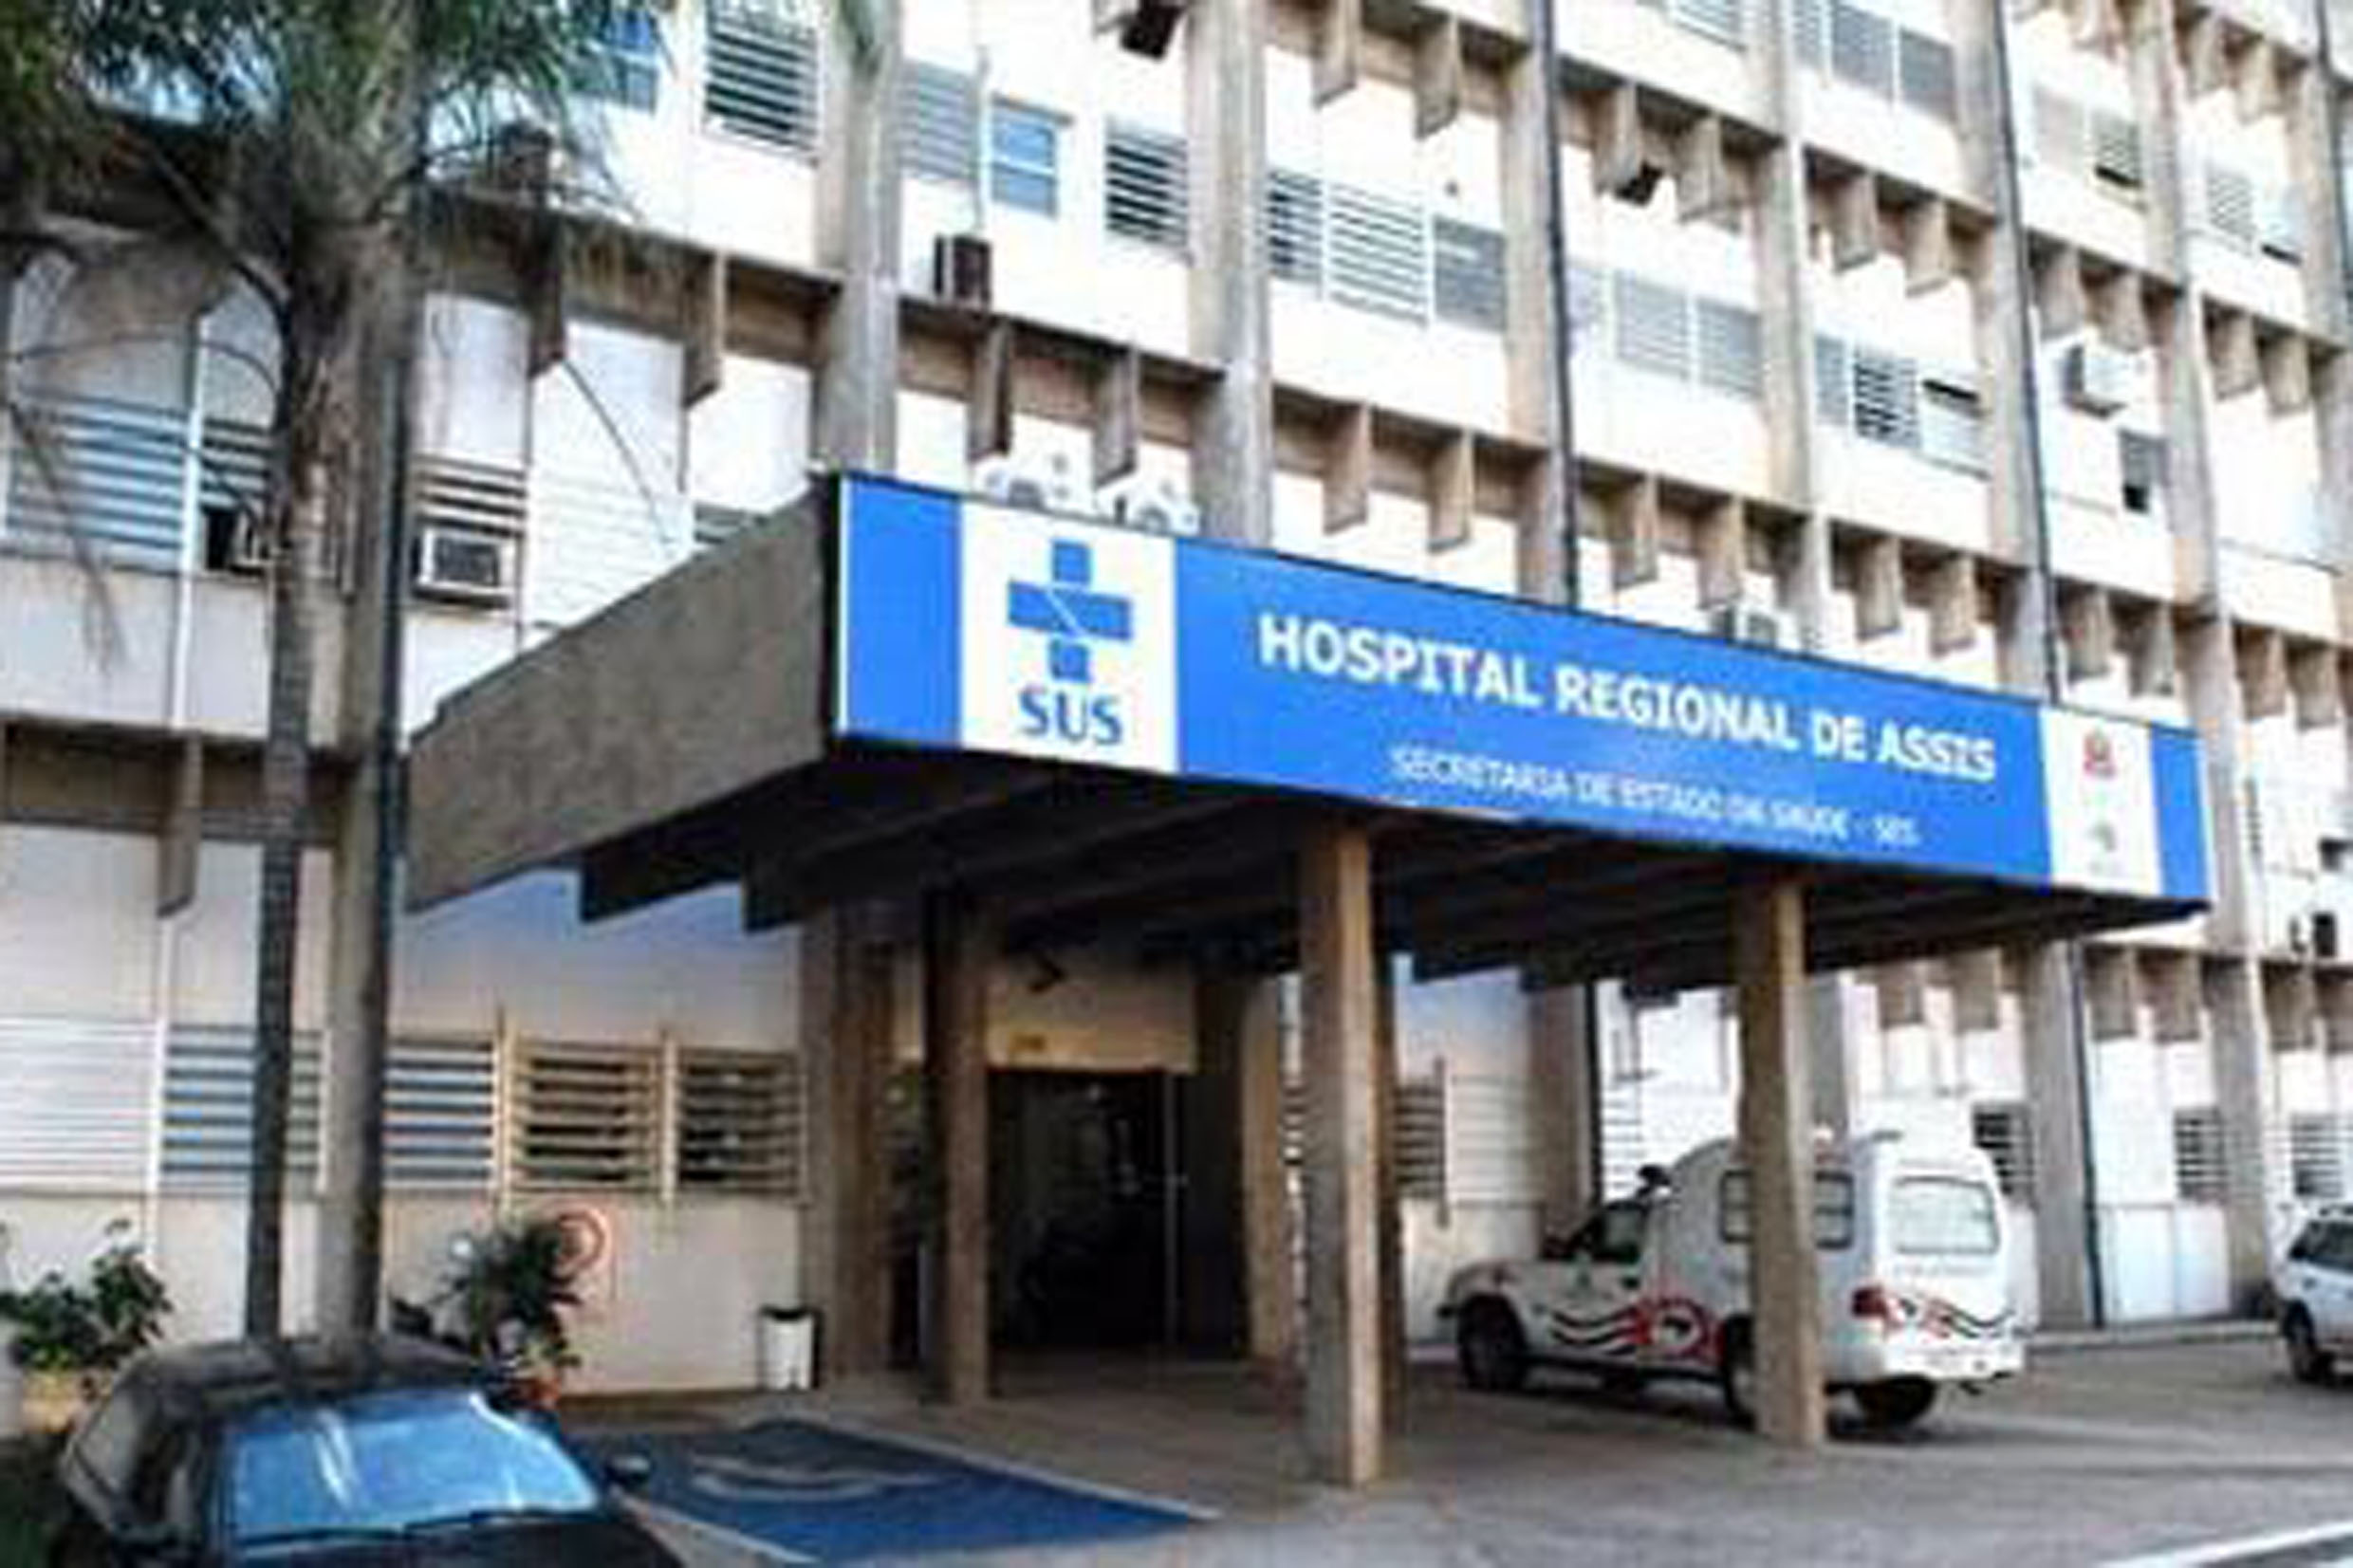 Hospital Regional de Assis <a style='float:right;color:#ccc' href='https://www3.al.sp.gov.br/repositorio/noticia/N-10-2016/fg195774.jpg' target=_blank><i class='bi bi-zoom-in'></i> Clique para ver a imagem </a>